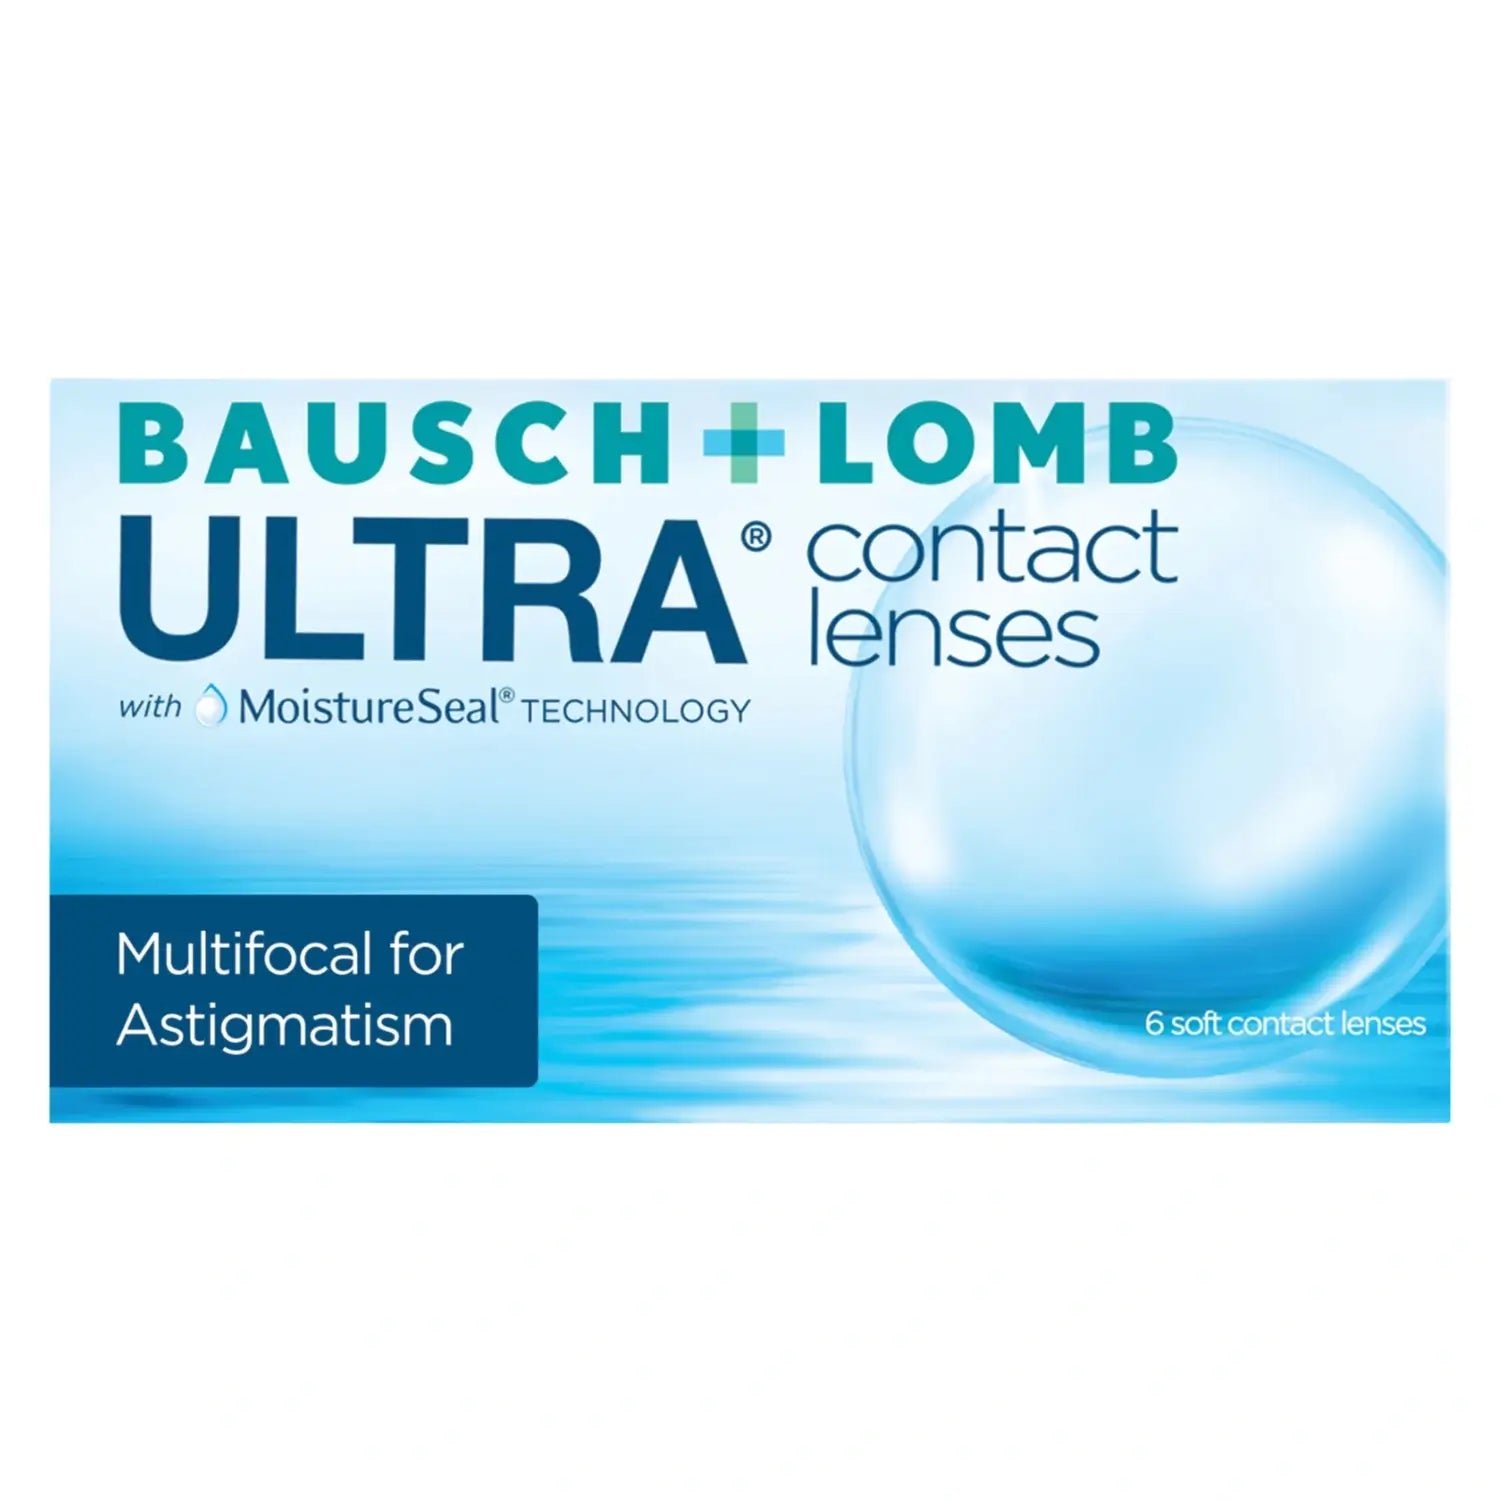 Bausch+Lomb Ultra contact lenses